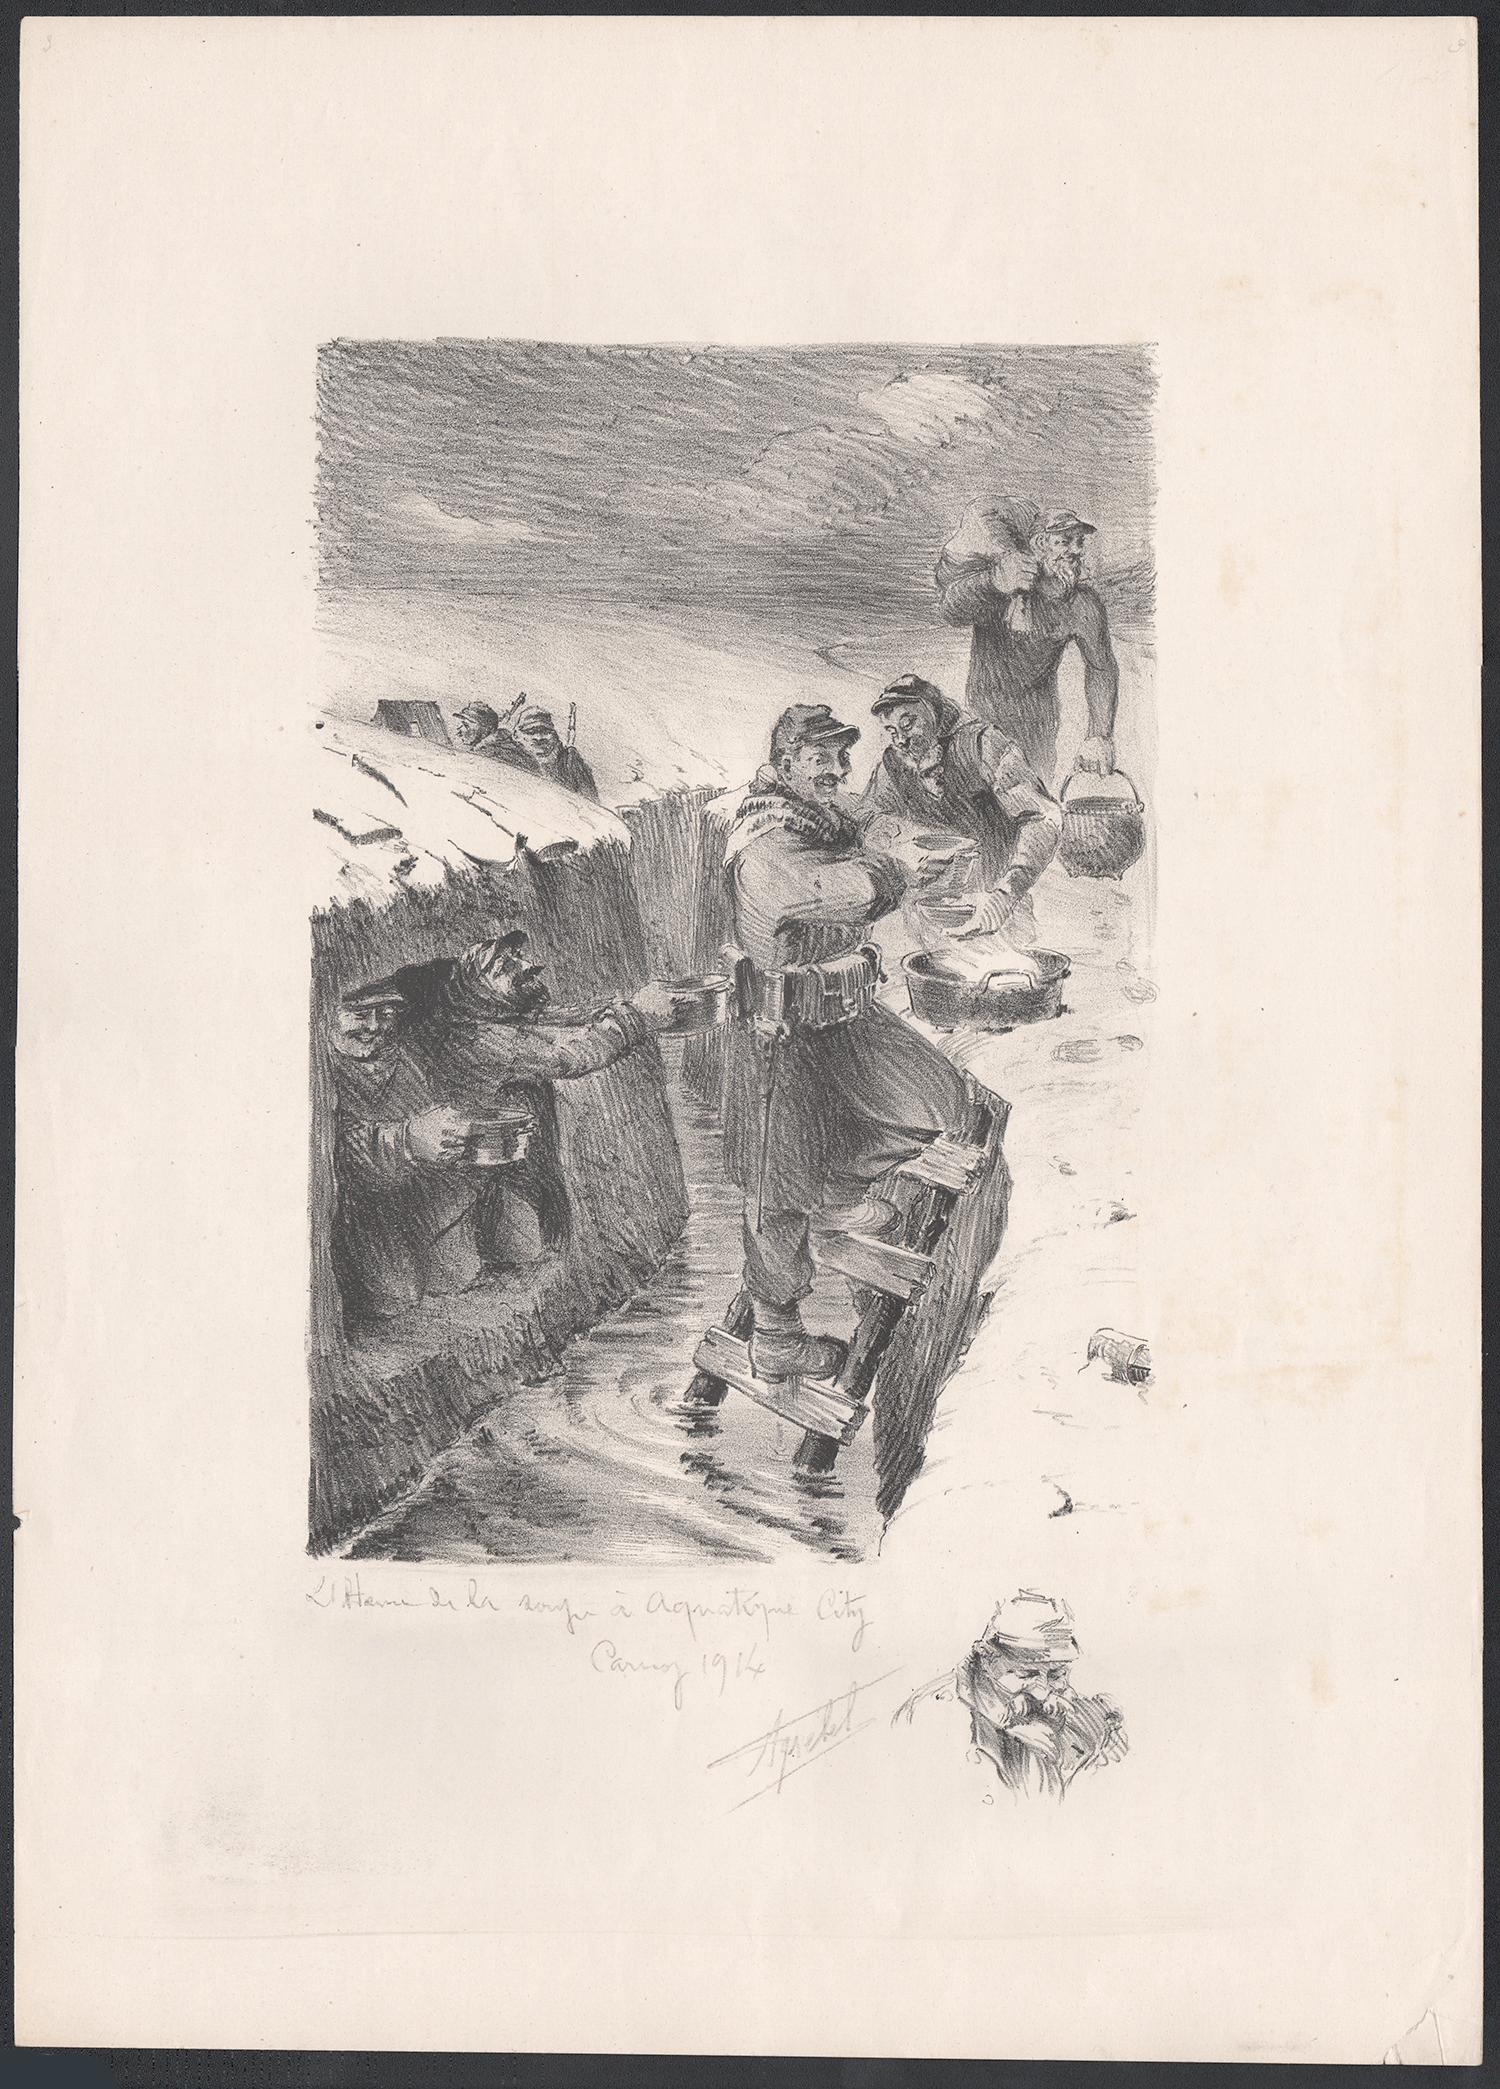 L'heure de la soupe a aquatique city, World War I lithograph by Truchet, 1914 - Print by Francis Abel Truchet